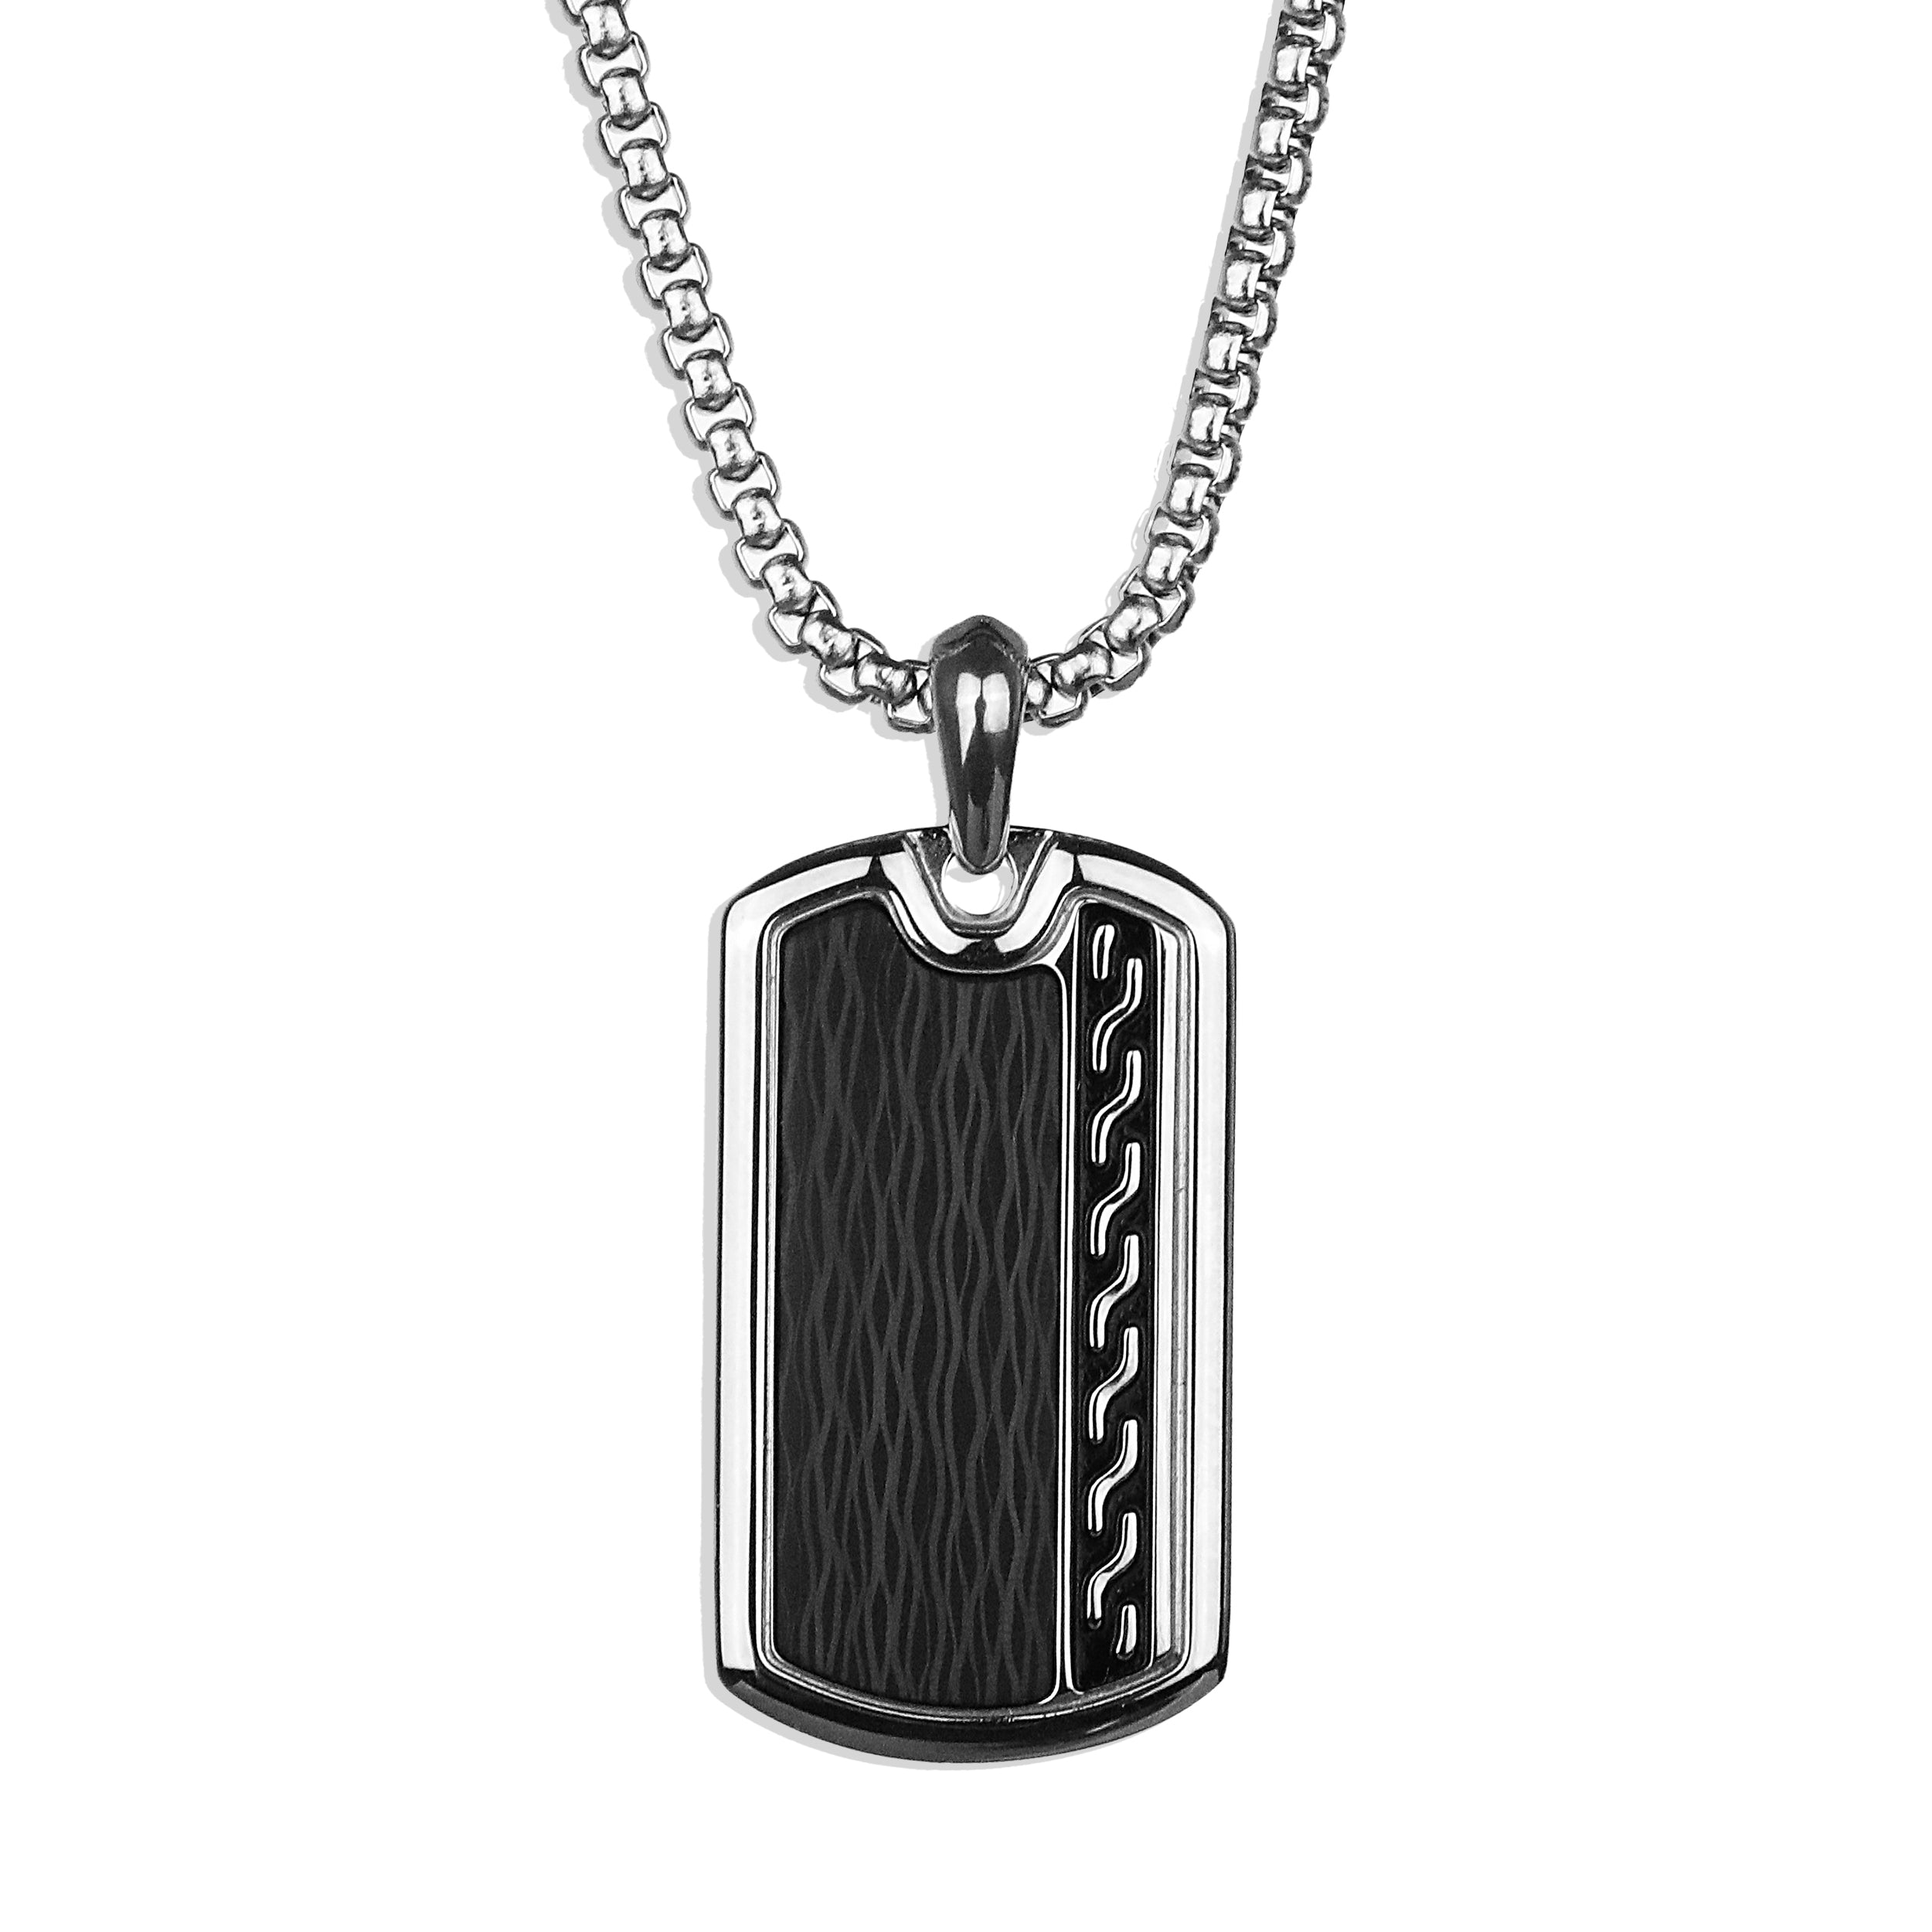 Carbon Wave Tag Necklace - Silver x Black